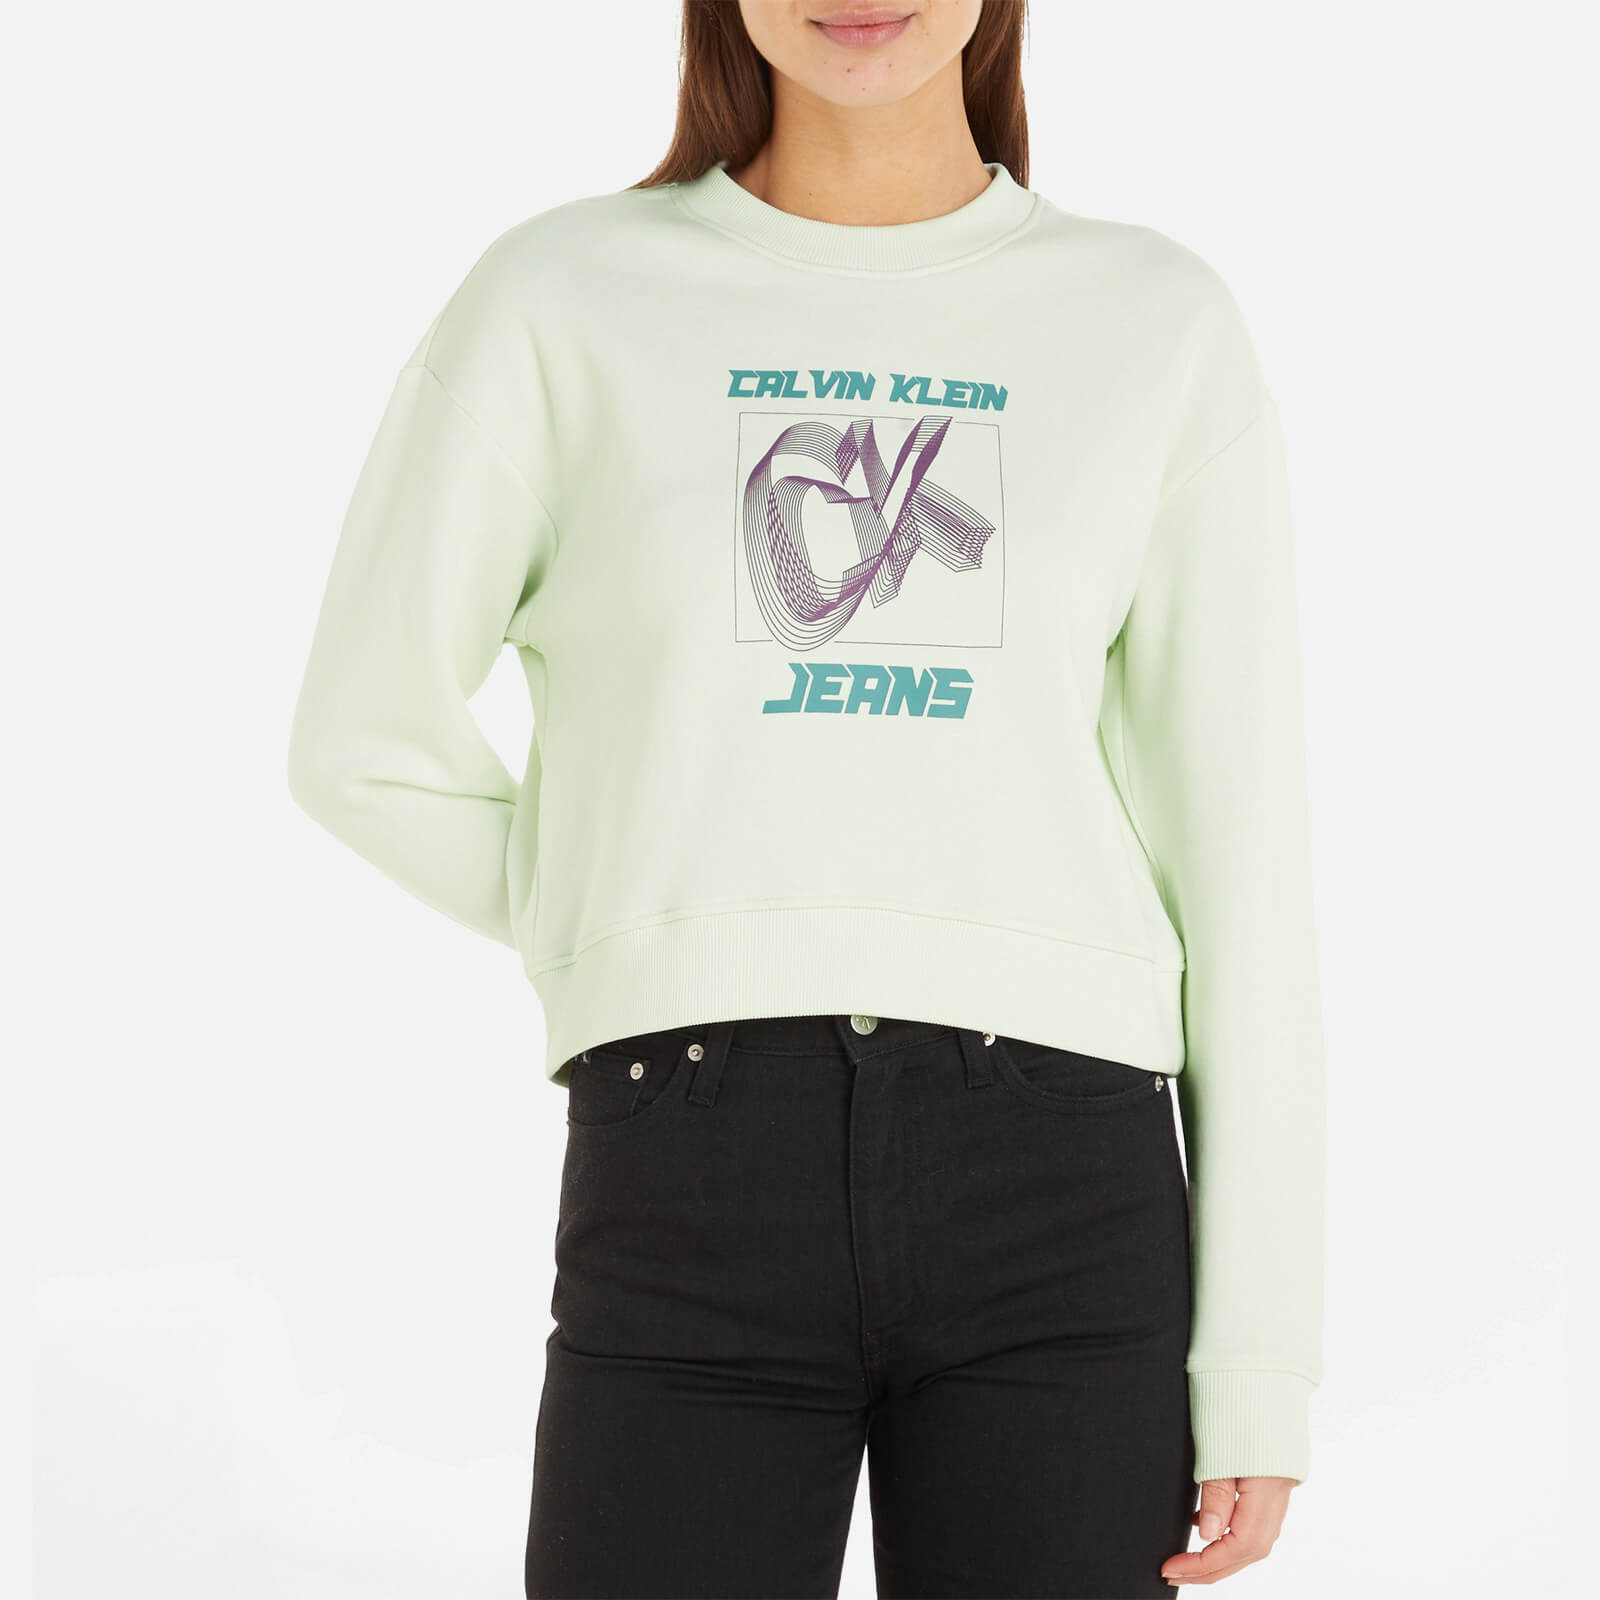 Calvin Klein Jeans Hyper Real Ck Cotton-Blend Jersey Sweatshirt product